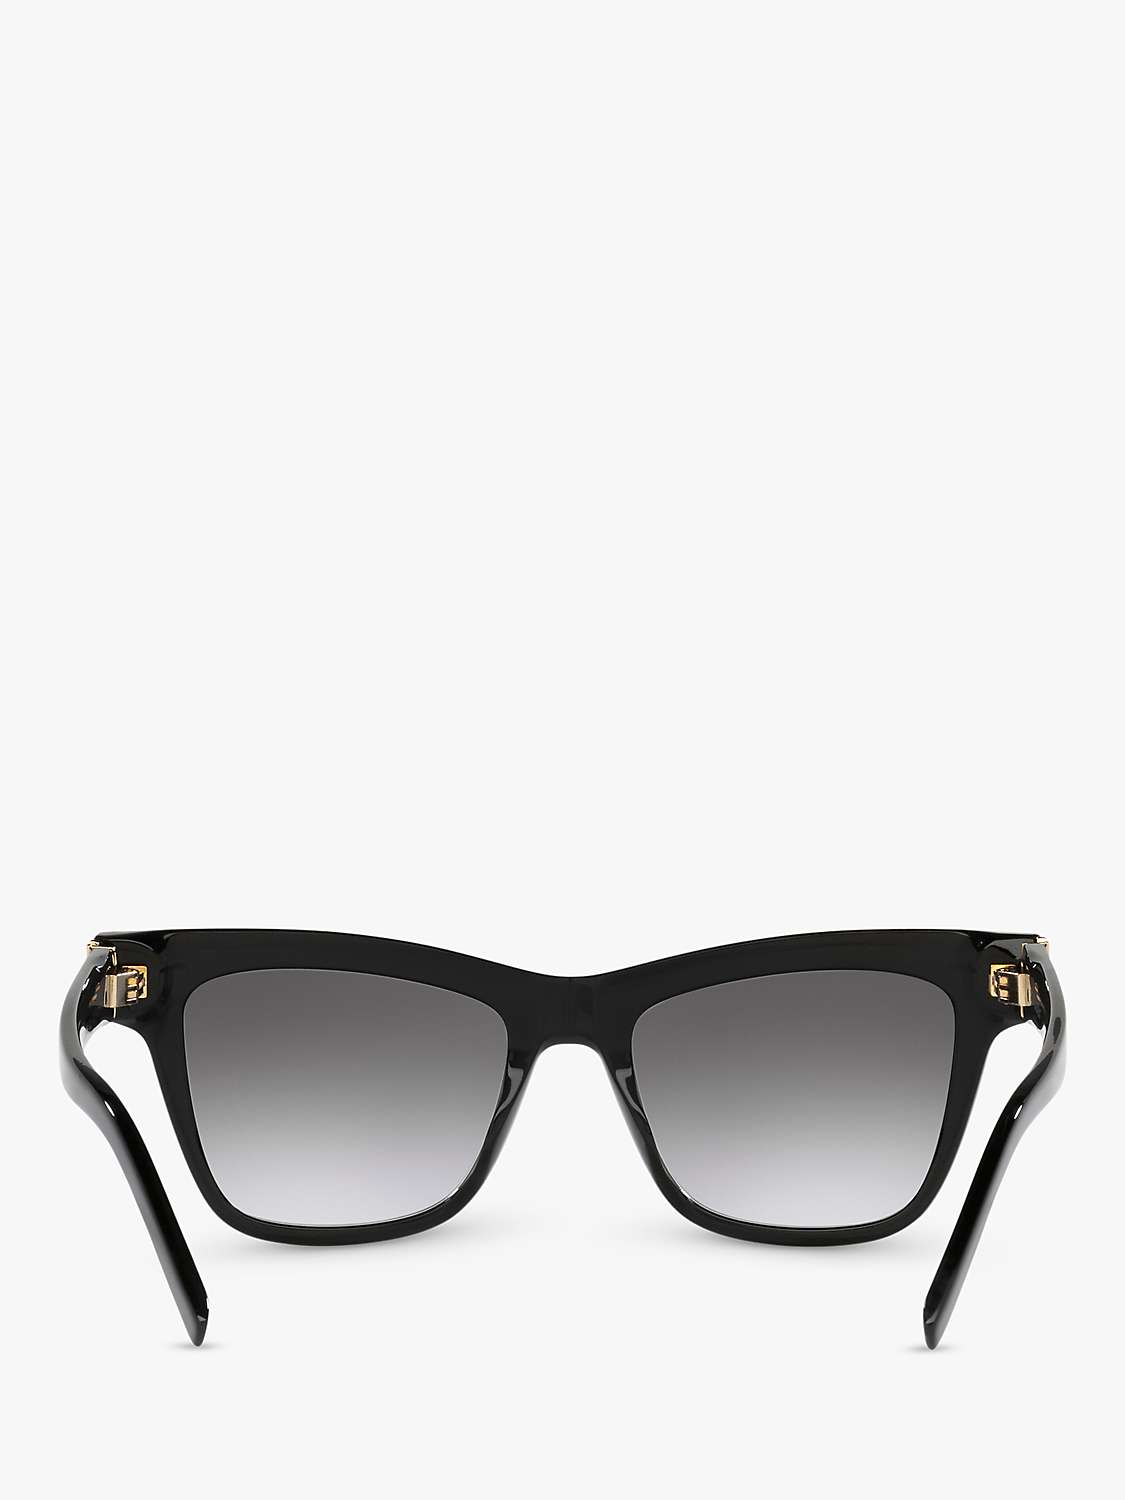 Buy Yves Saint Laurent YS000436 Women's Cat's Eye Sunglasses, Black/Grey Gradient Online at johnlewis.com